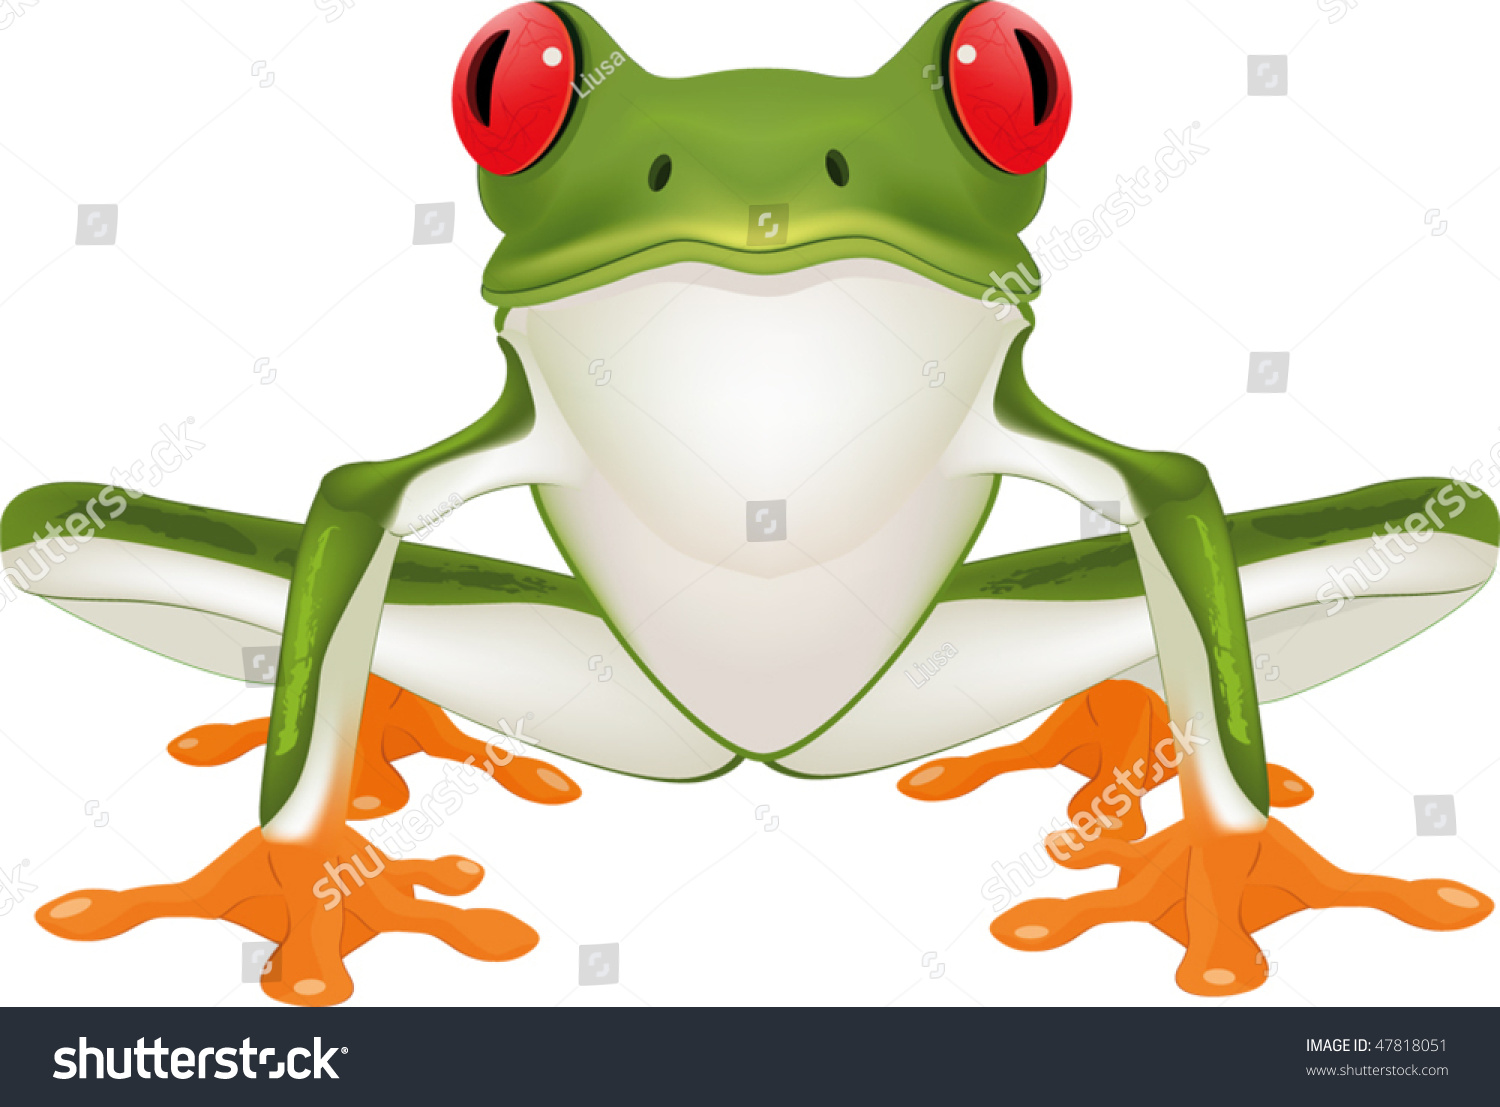 Frog Stock Vector Illustration 47818051 : Shutterstock